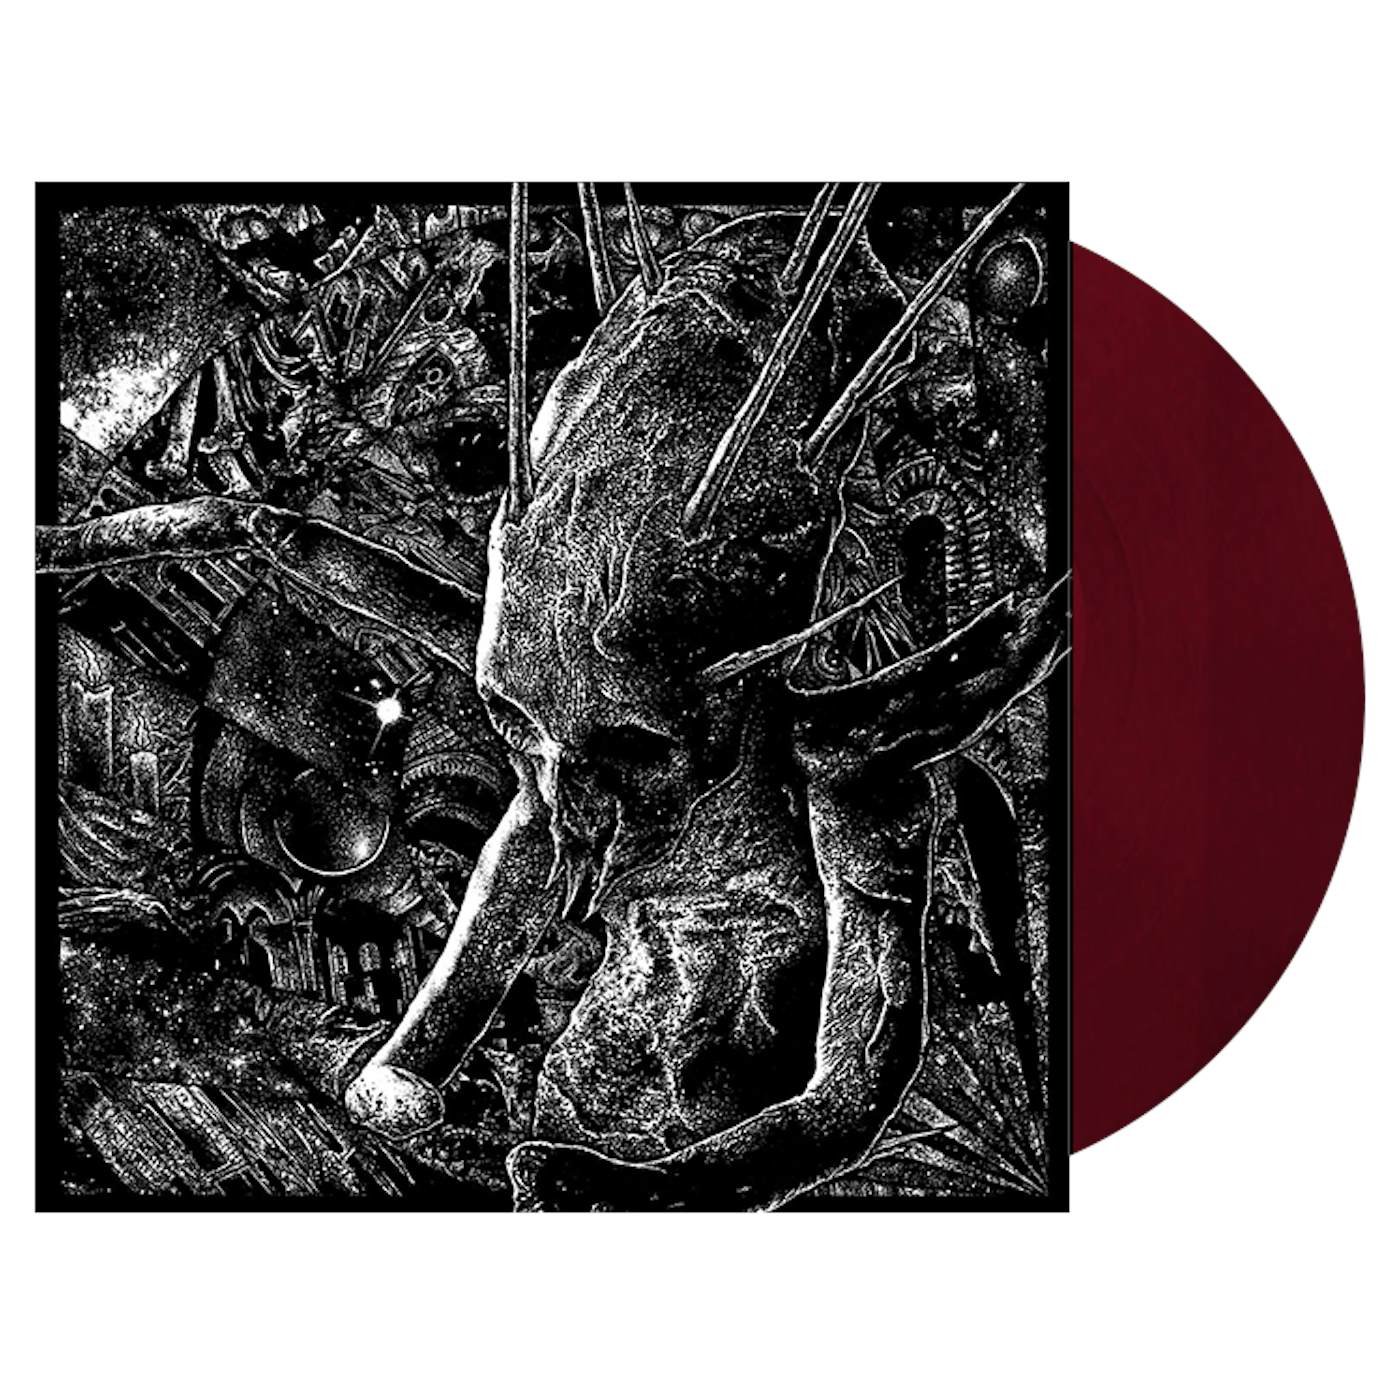 POISON BLOOD - 'Poison Blood' LP (Vinyl)